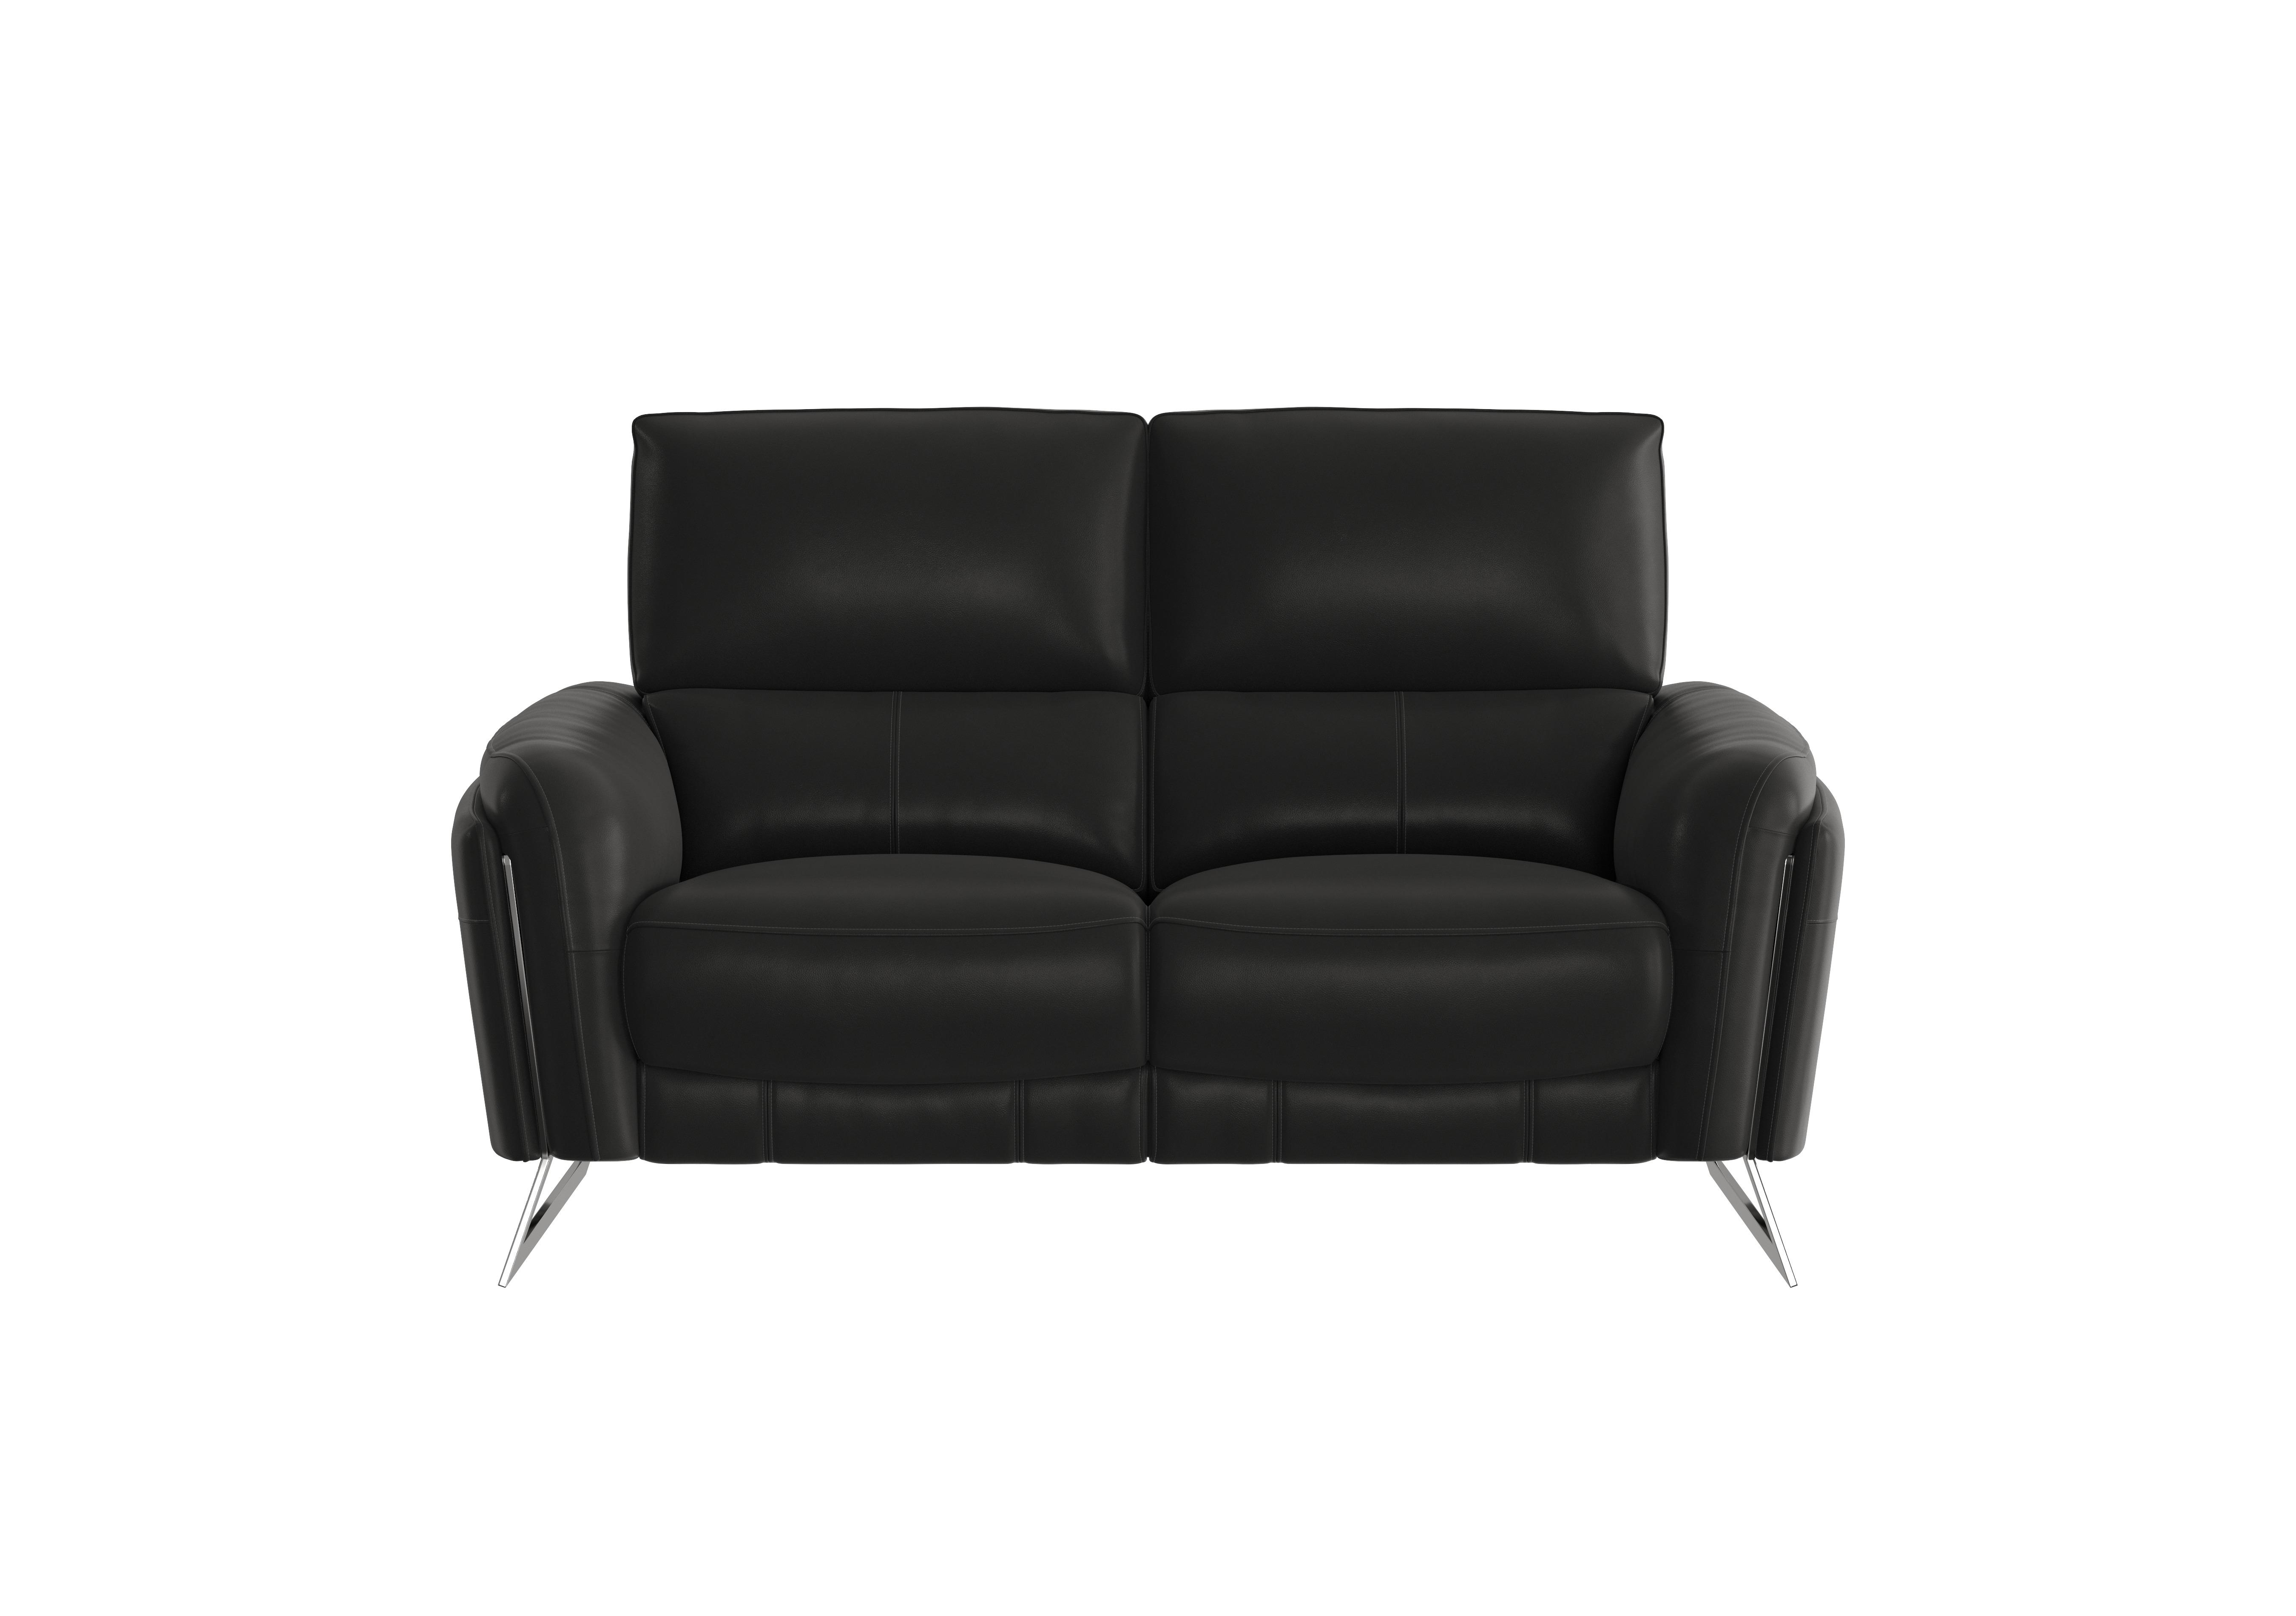 Amarilla 2 Seater Leather Sofa in Bv-3500 Classic Black on Furniture Village